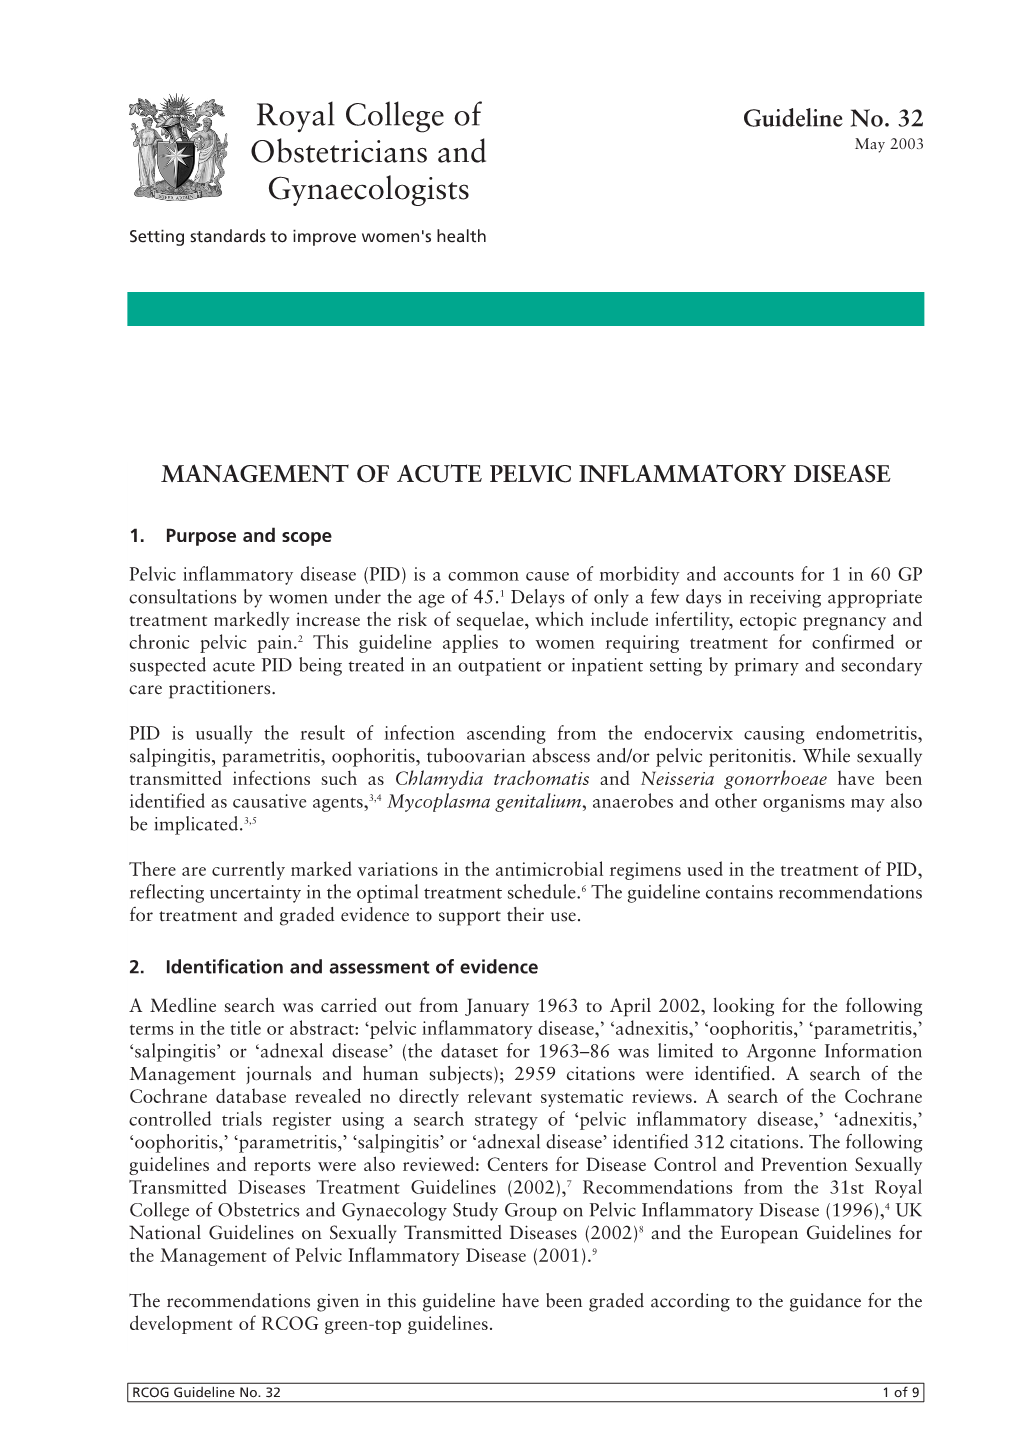 Management of Acute Pelvic Inflammatory Disease